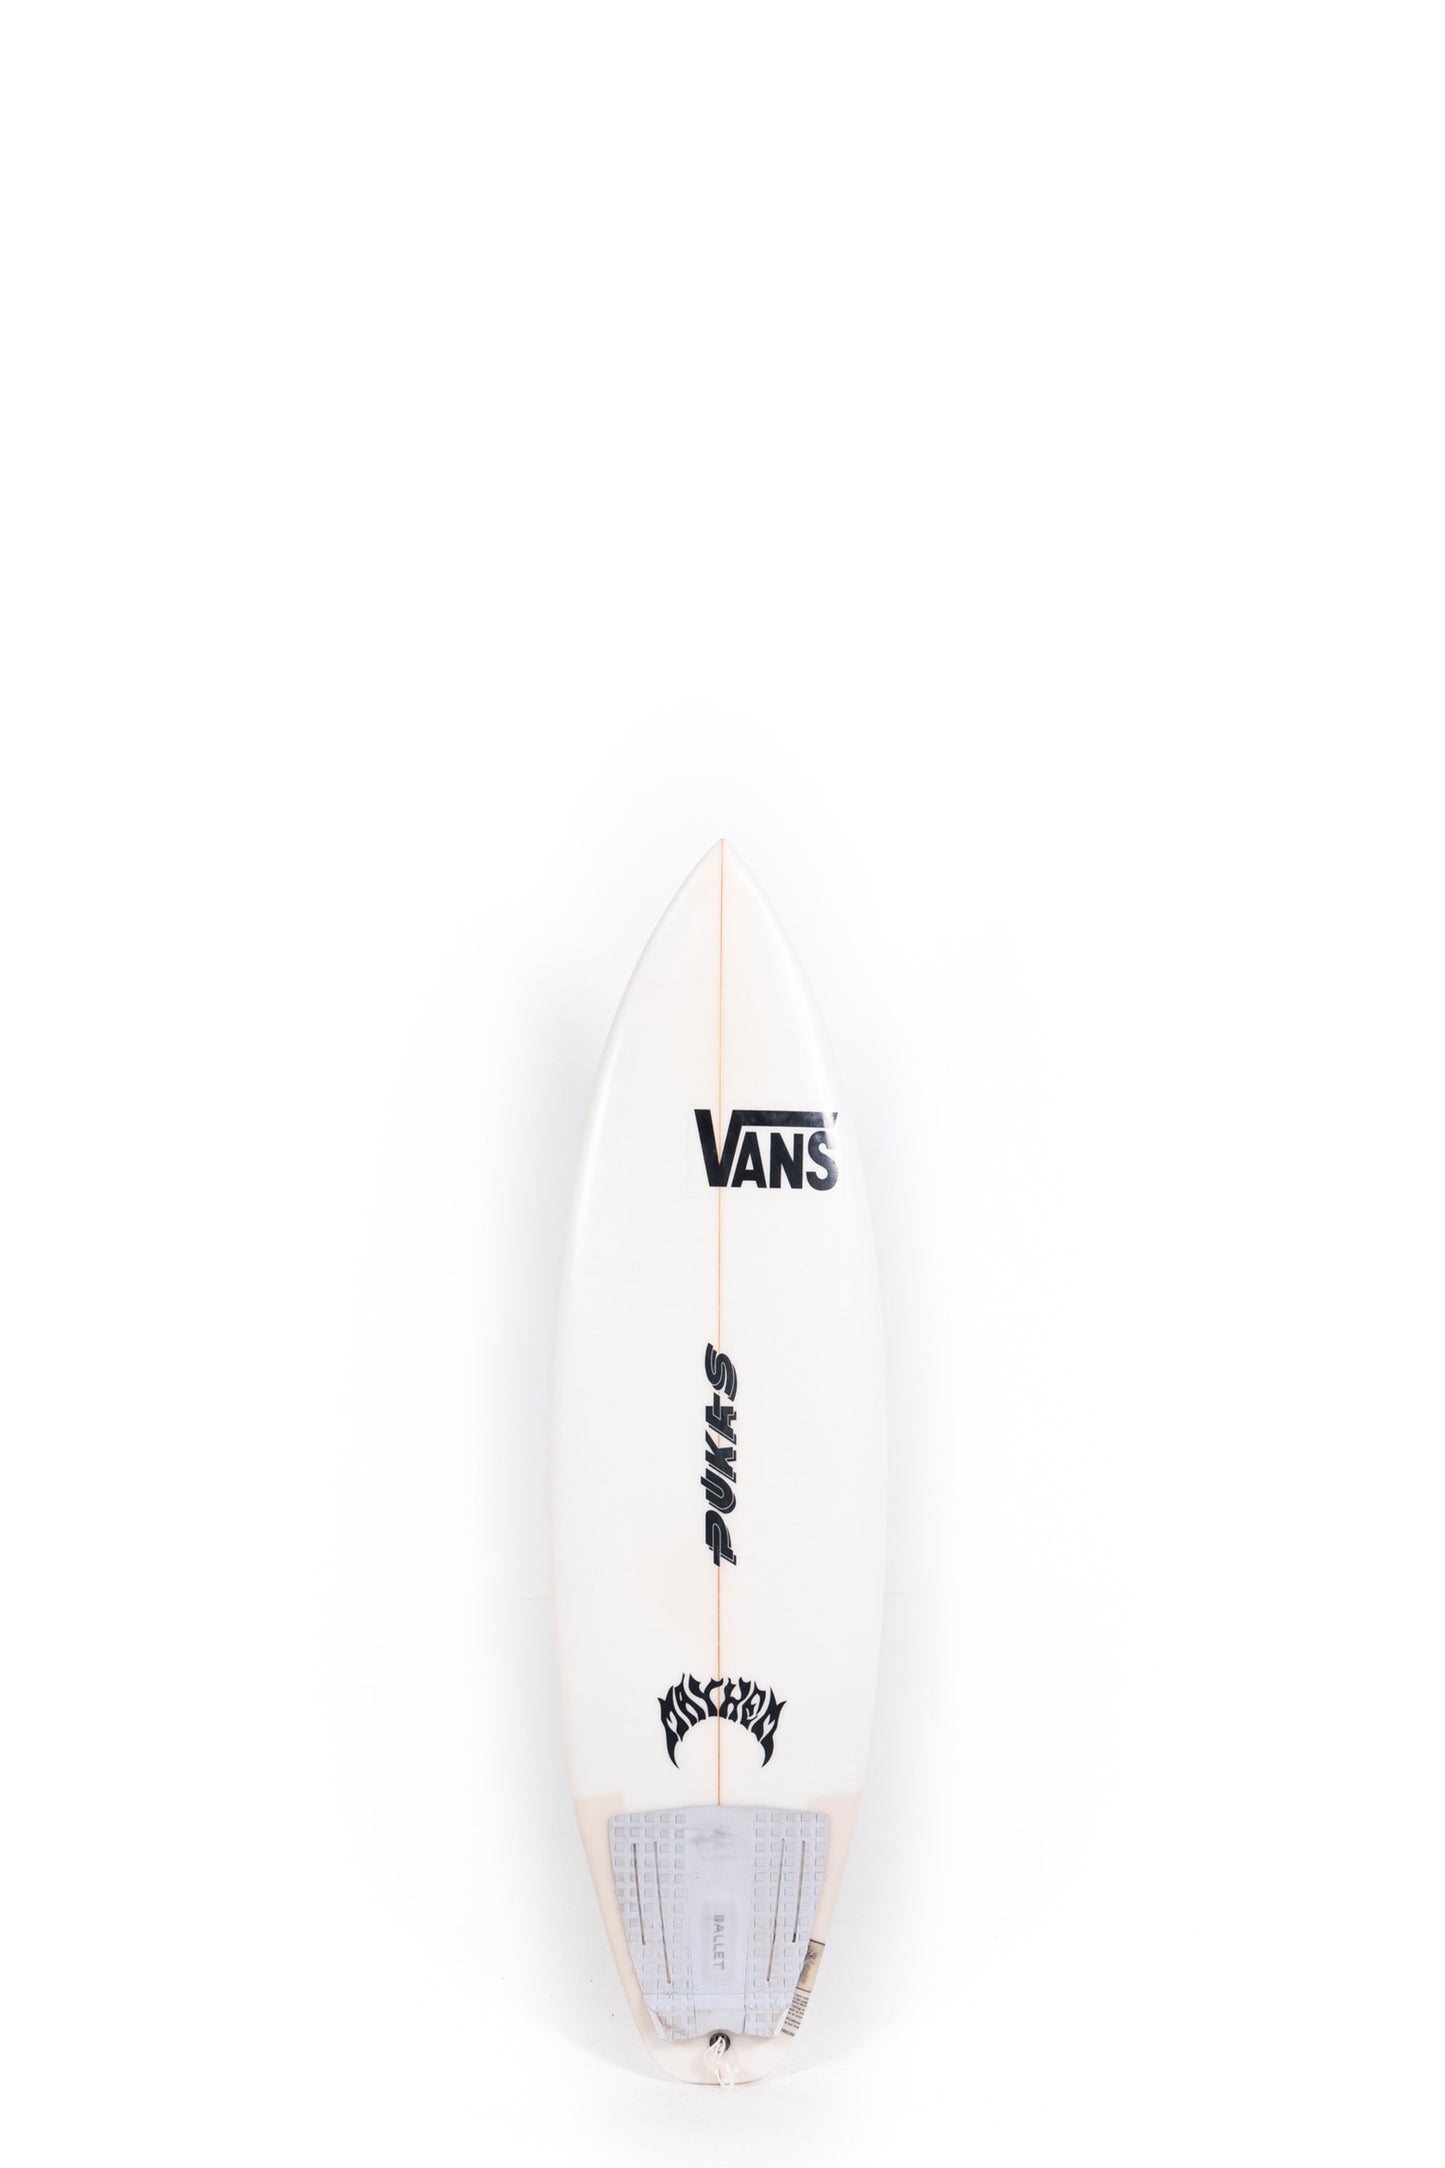 PUKAS SURFBOARDS | Find all models at PUKAS SURF SHOP